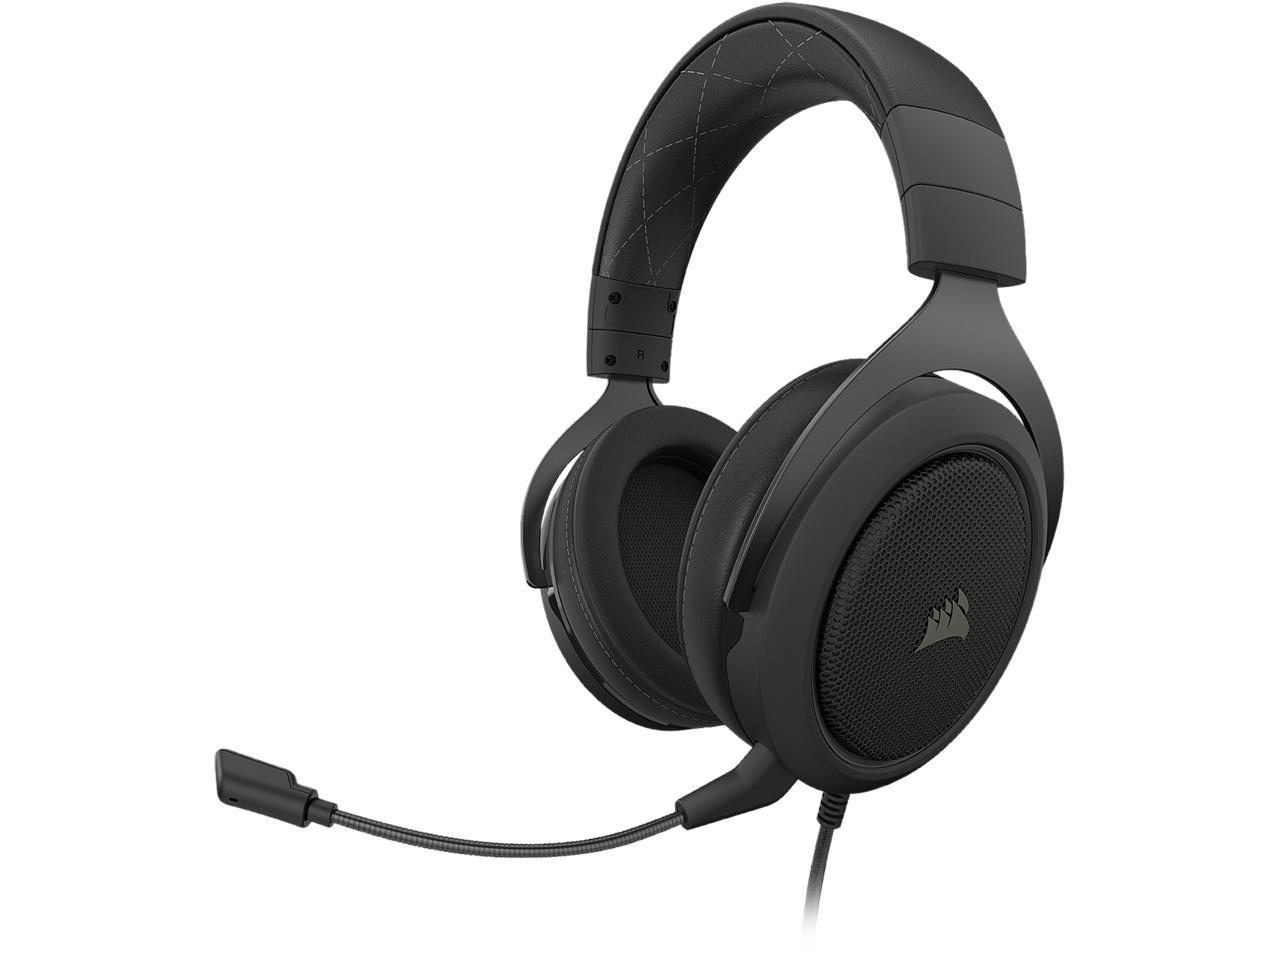 CORSAIR HS60 PRO SURROUND 7.1 Wired Stereo Gaming Headset @Newegg $47